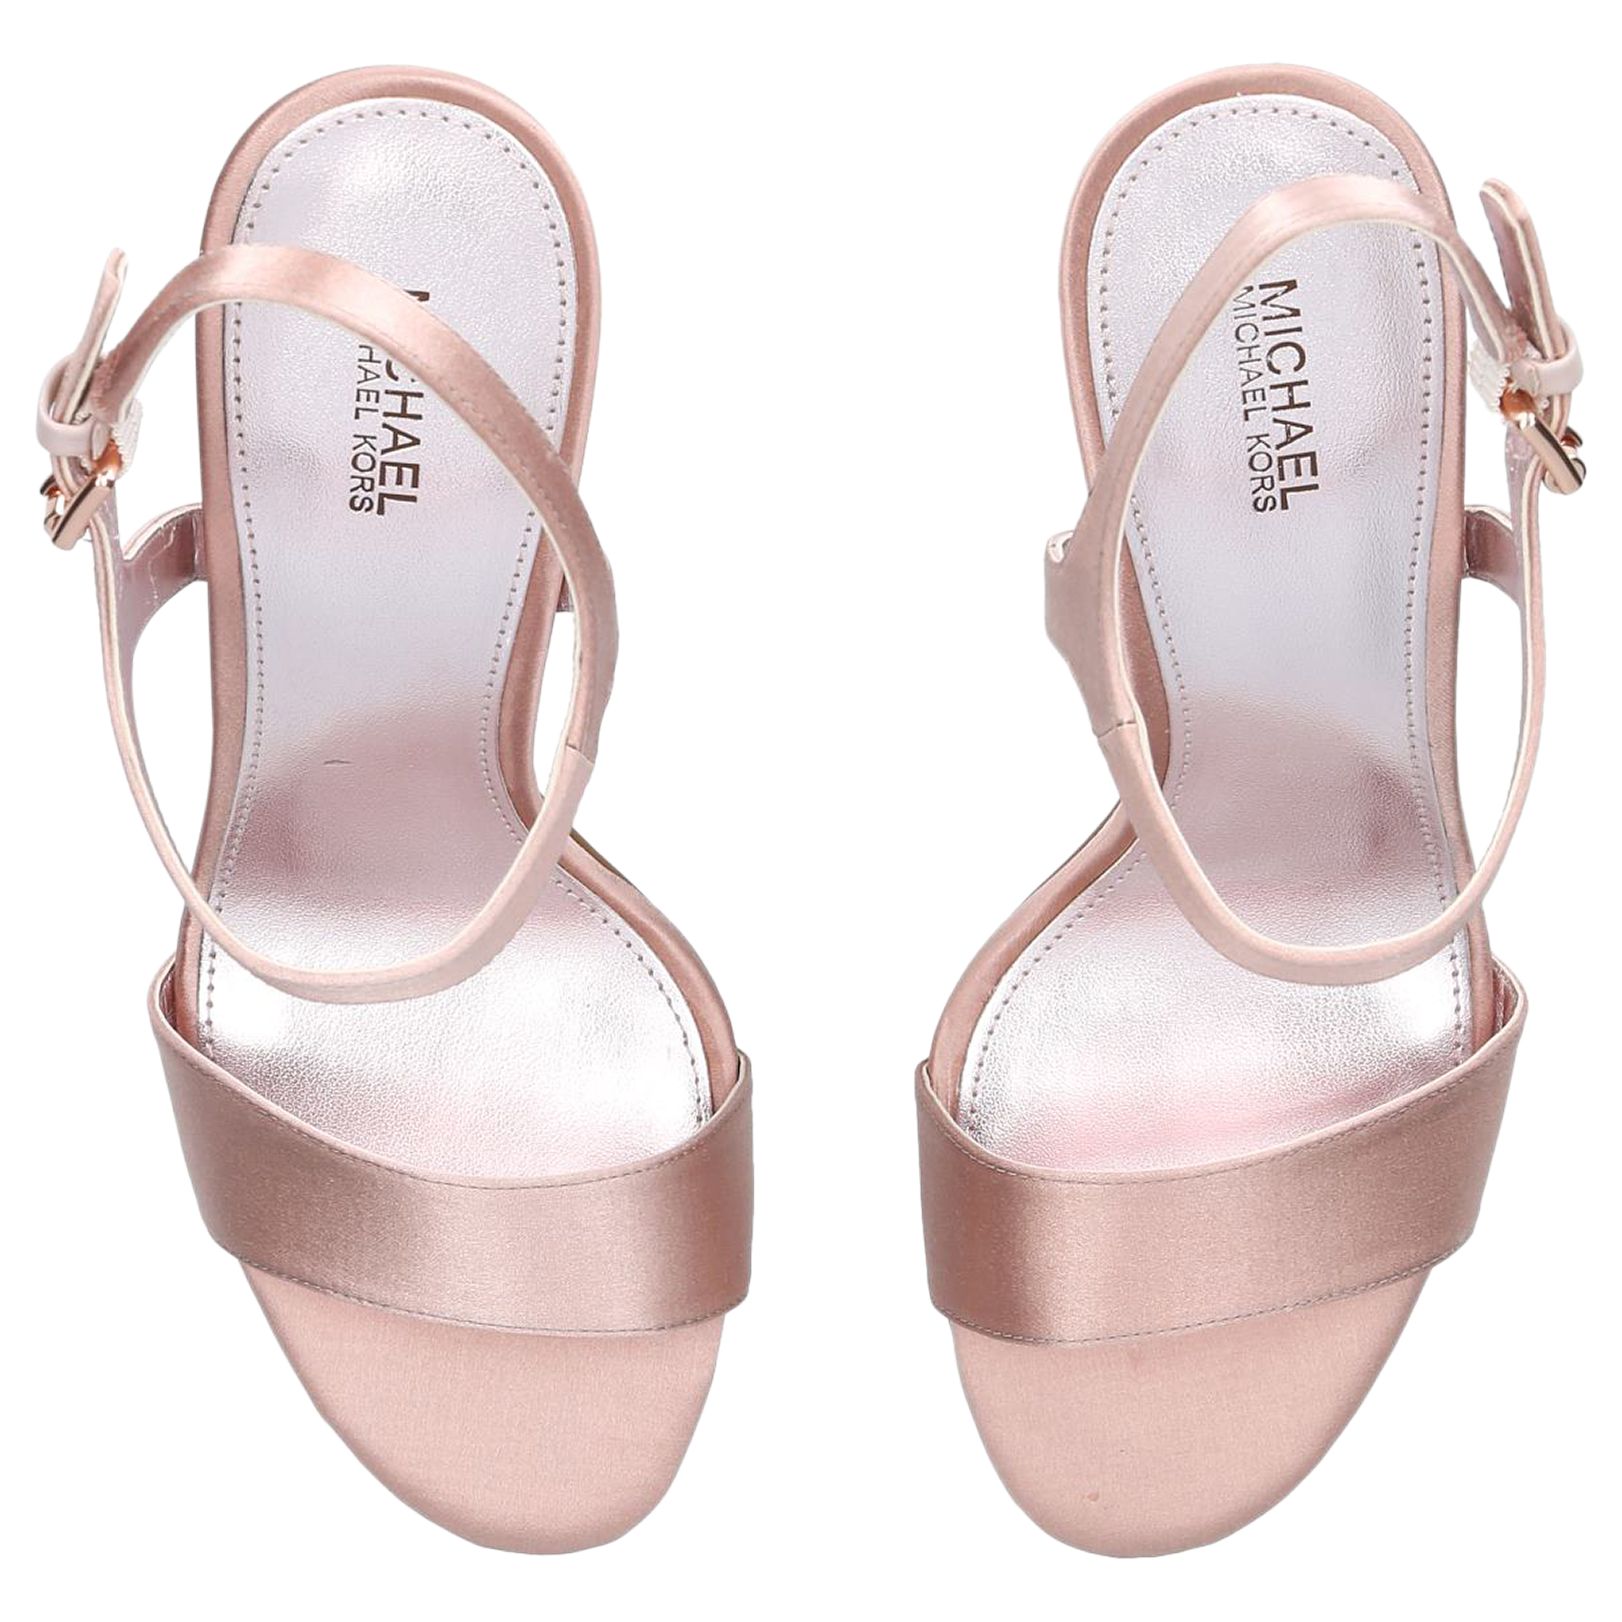 pale pink block heel shoes